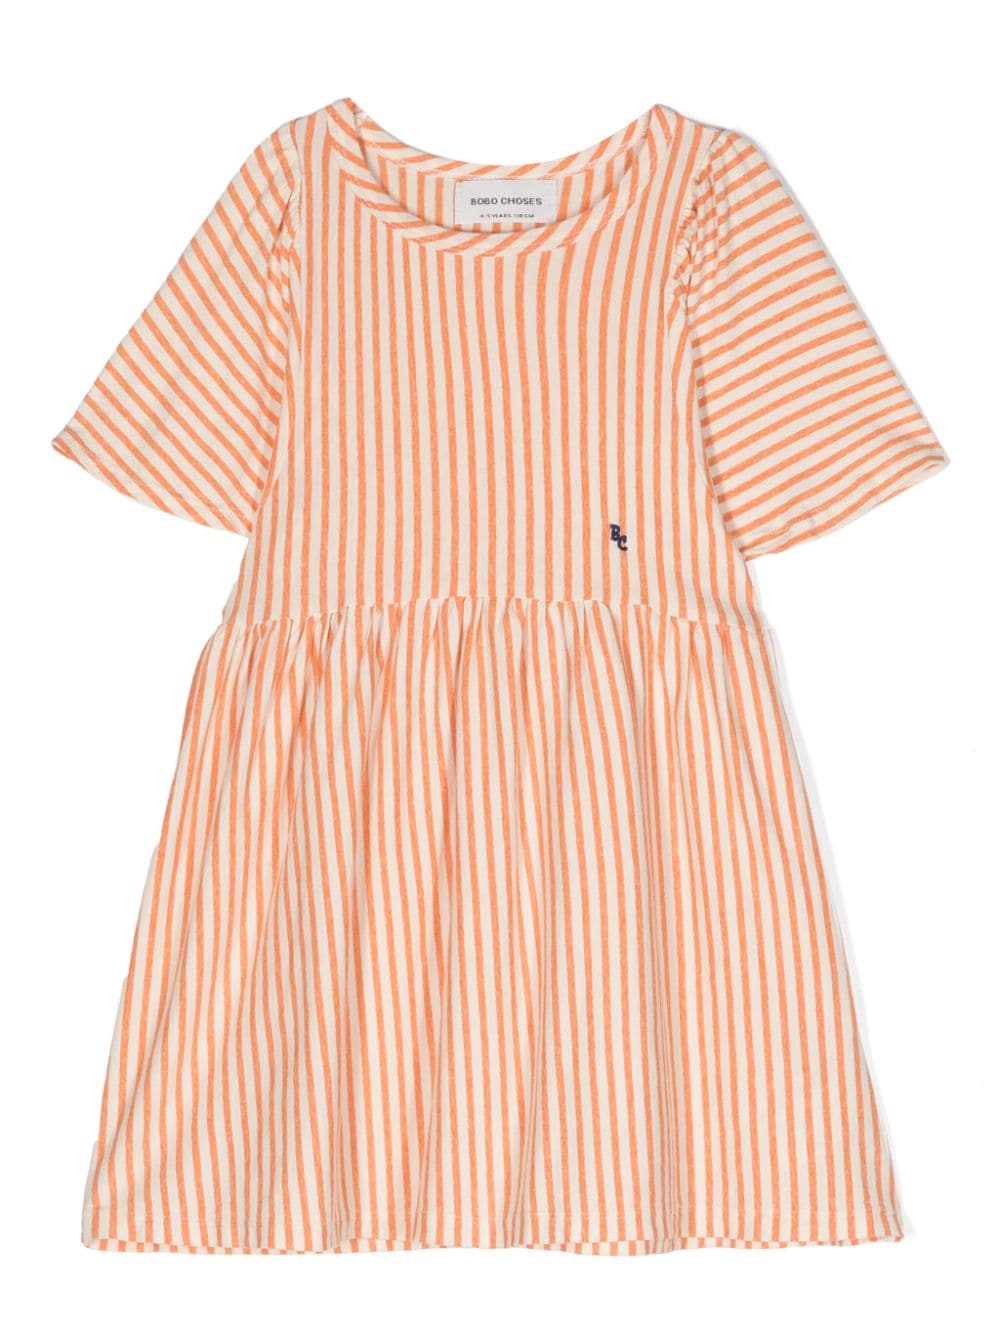 Bobo Choses logo-embroidered striped dress - Orange von Bobo Choses